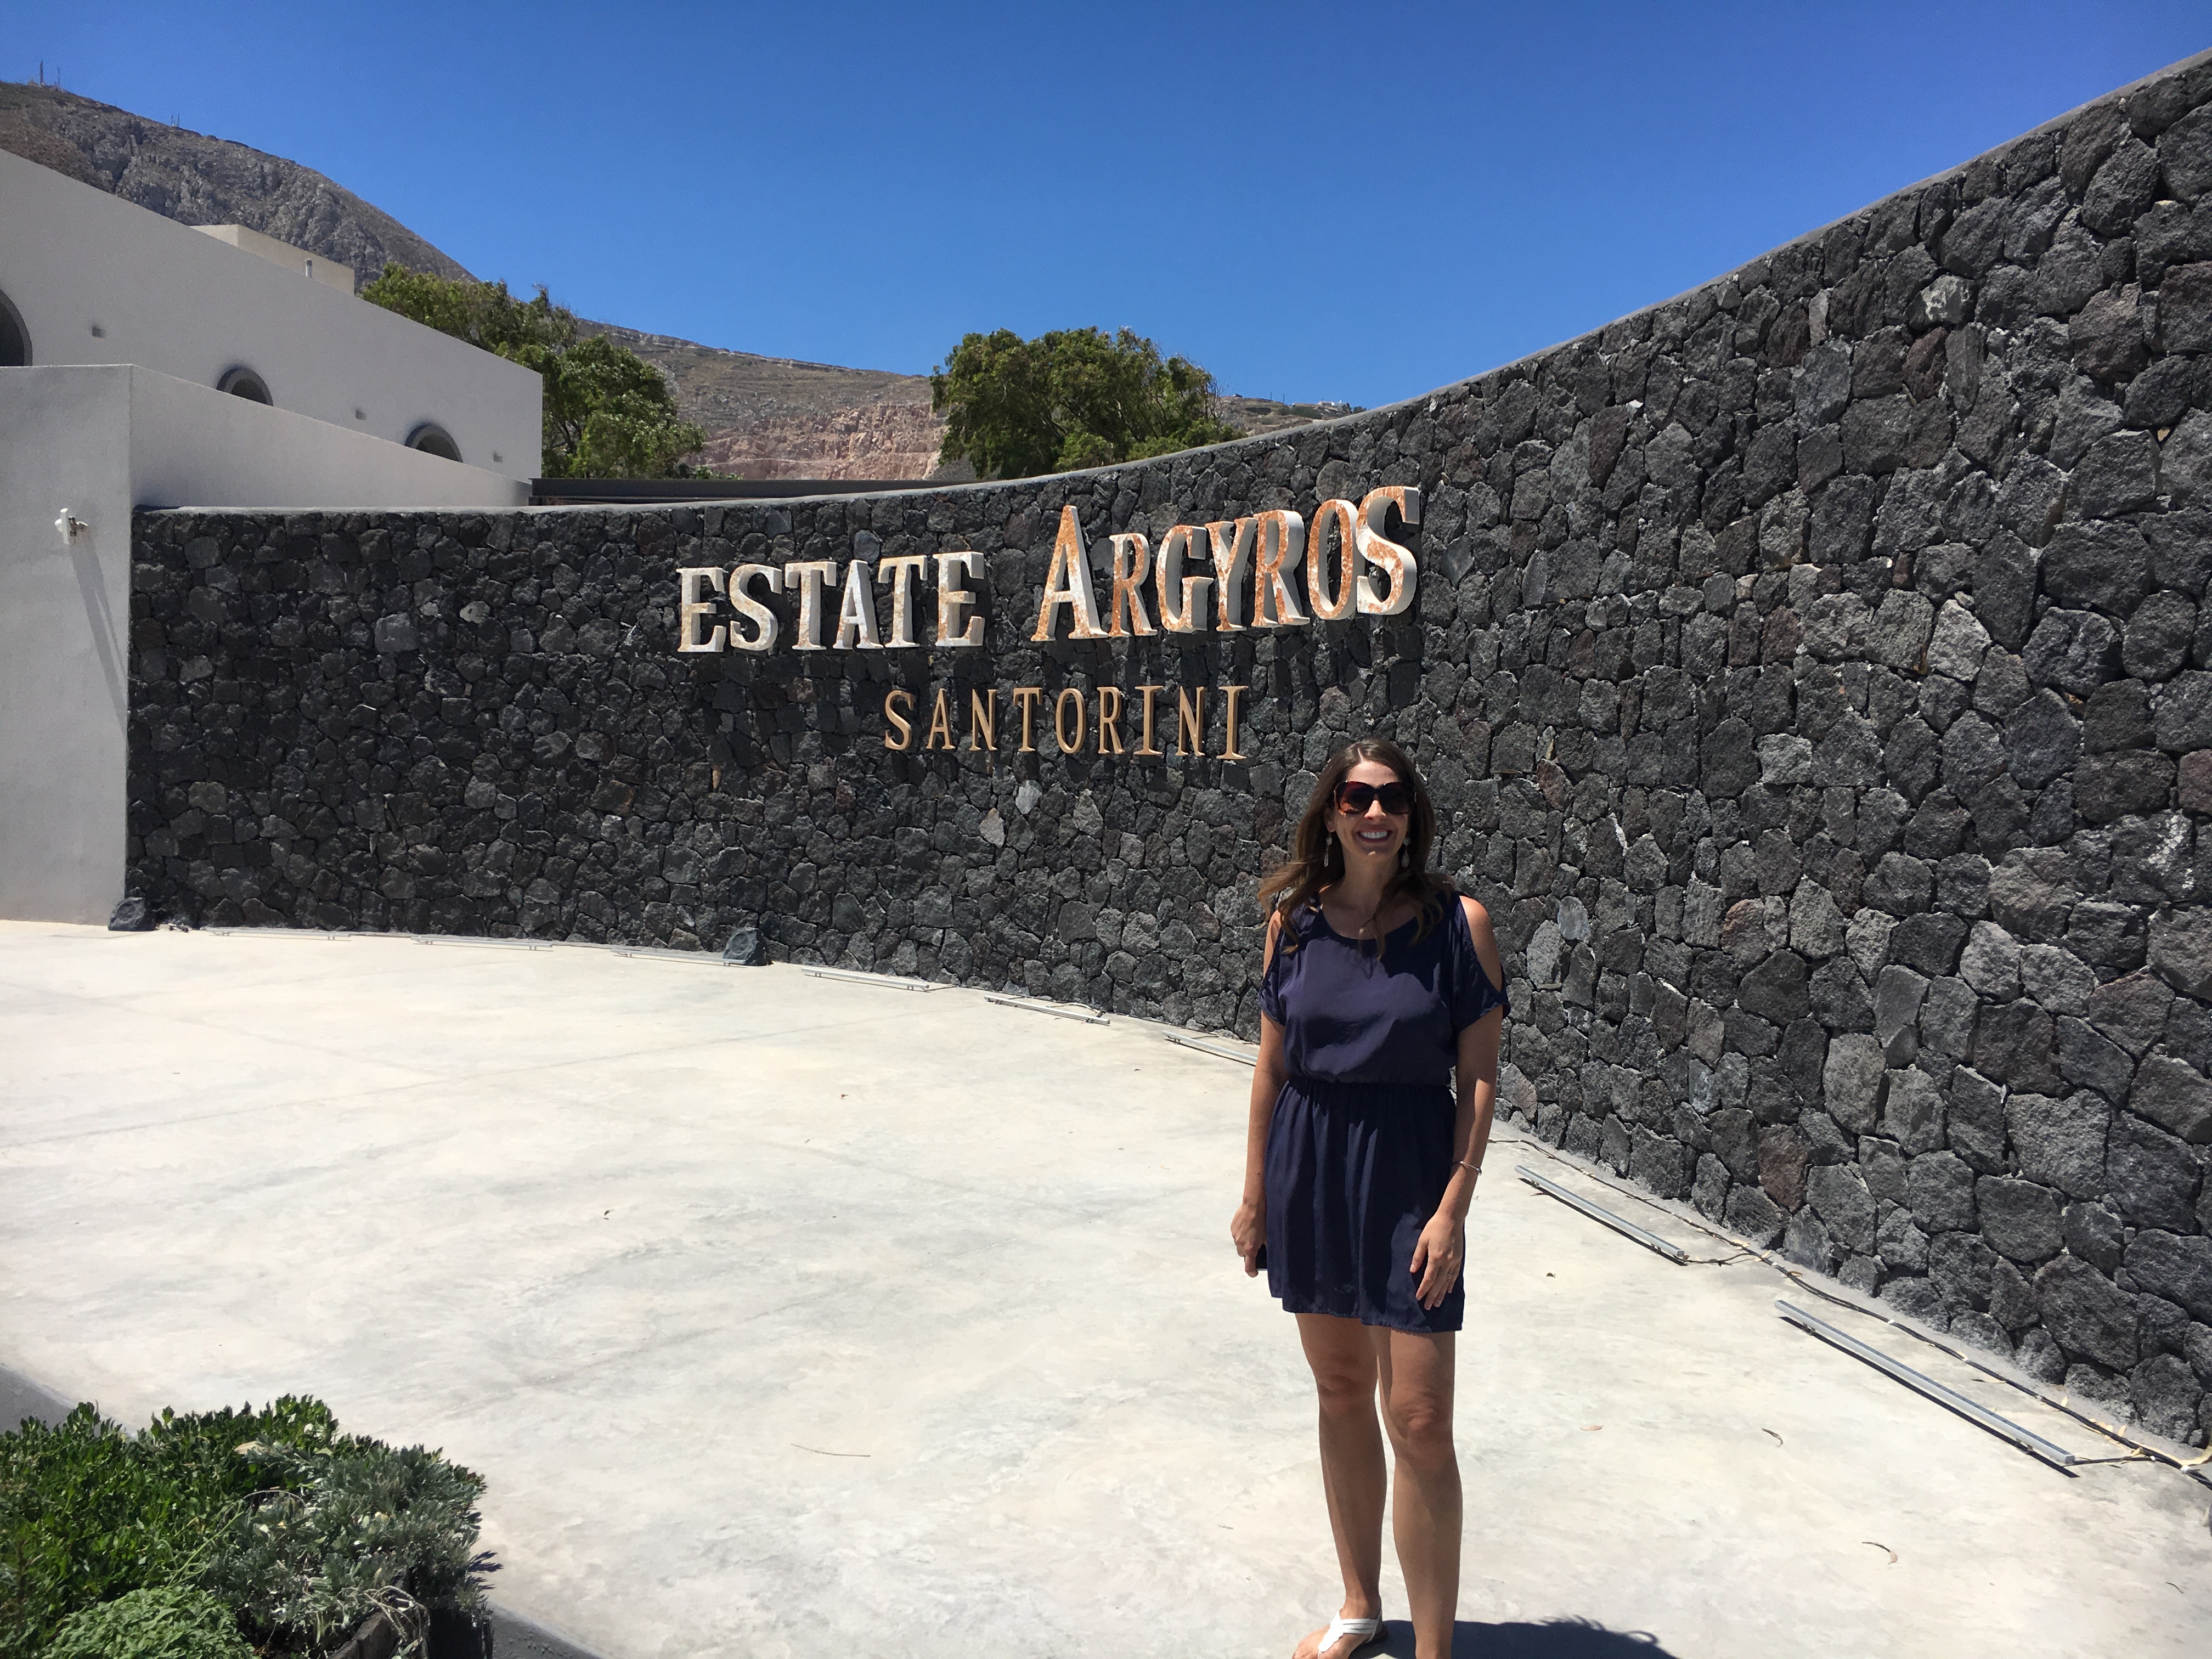 Outside Estate Argyros in Santorini